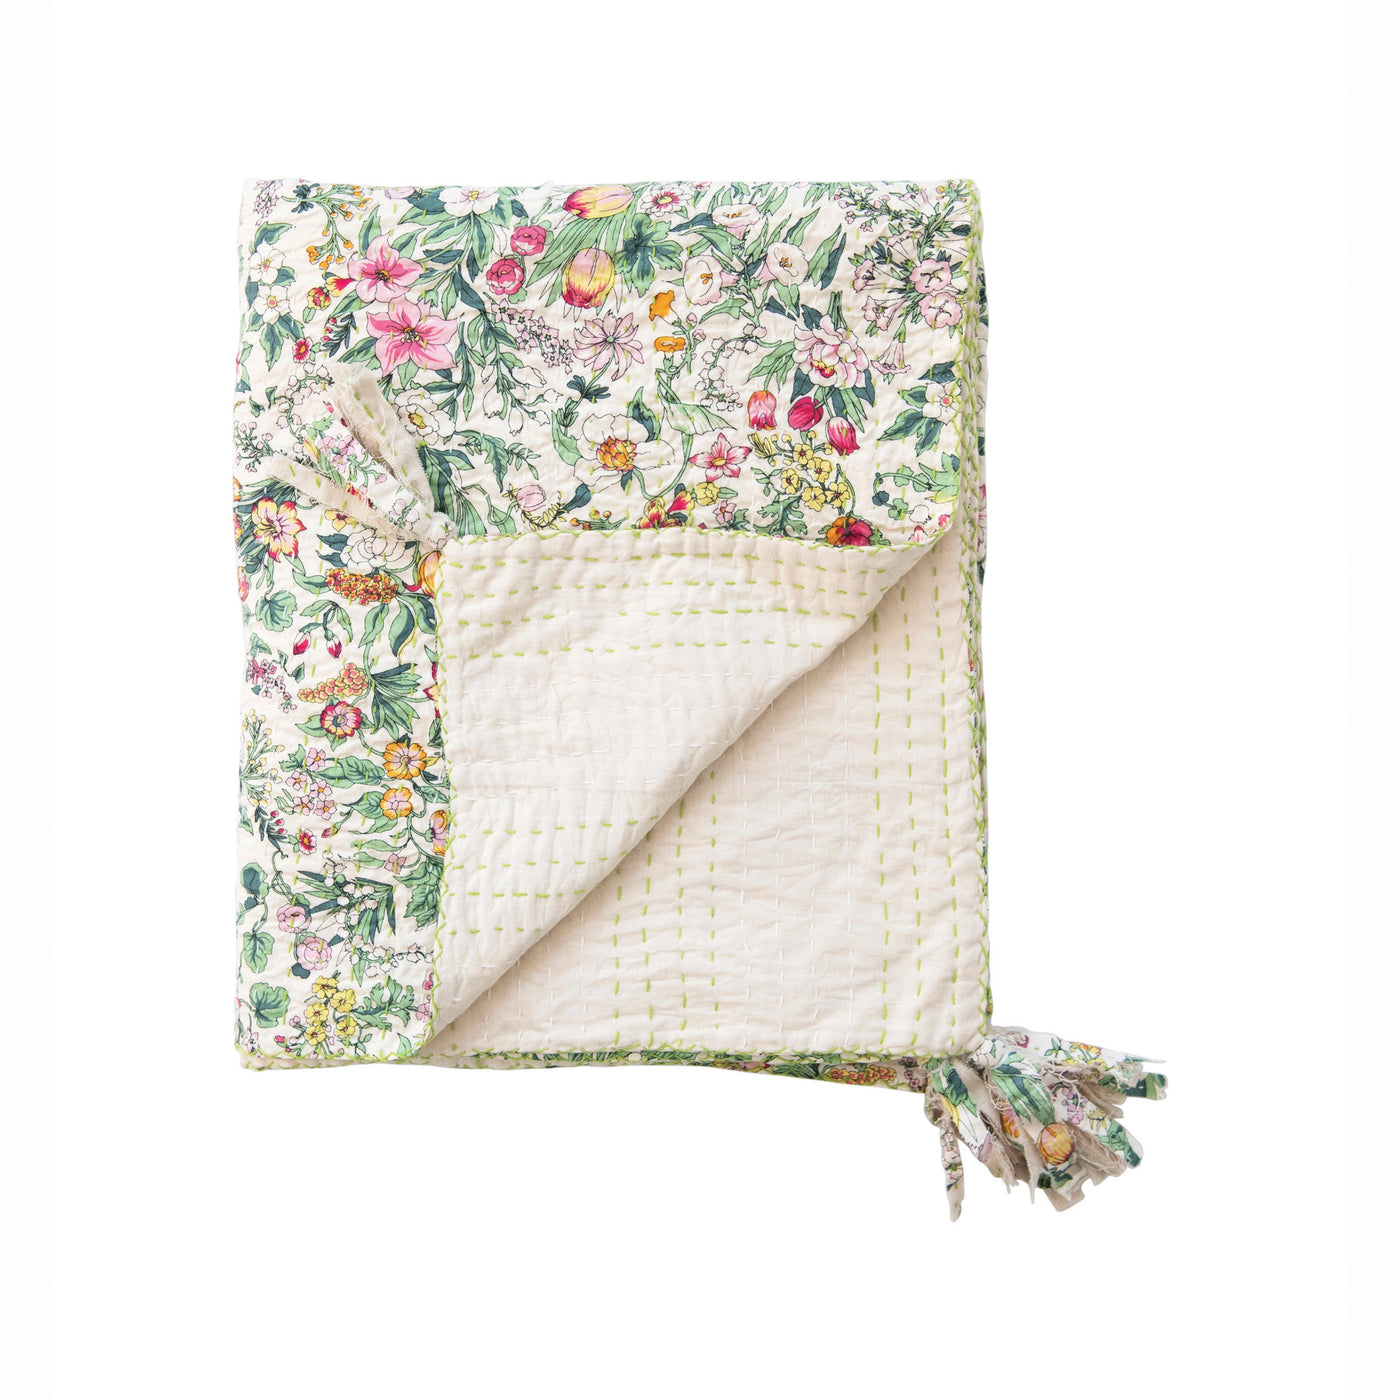 Kantha Stitch Floral Throw Blanket with Tassels